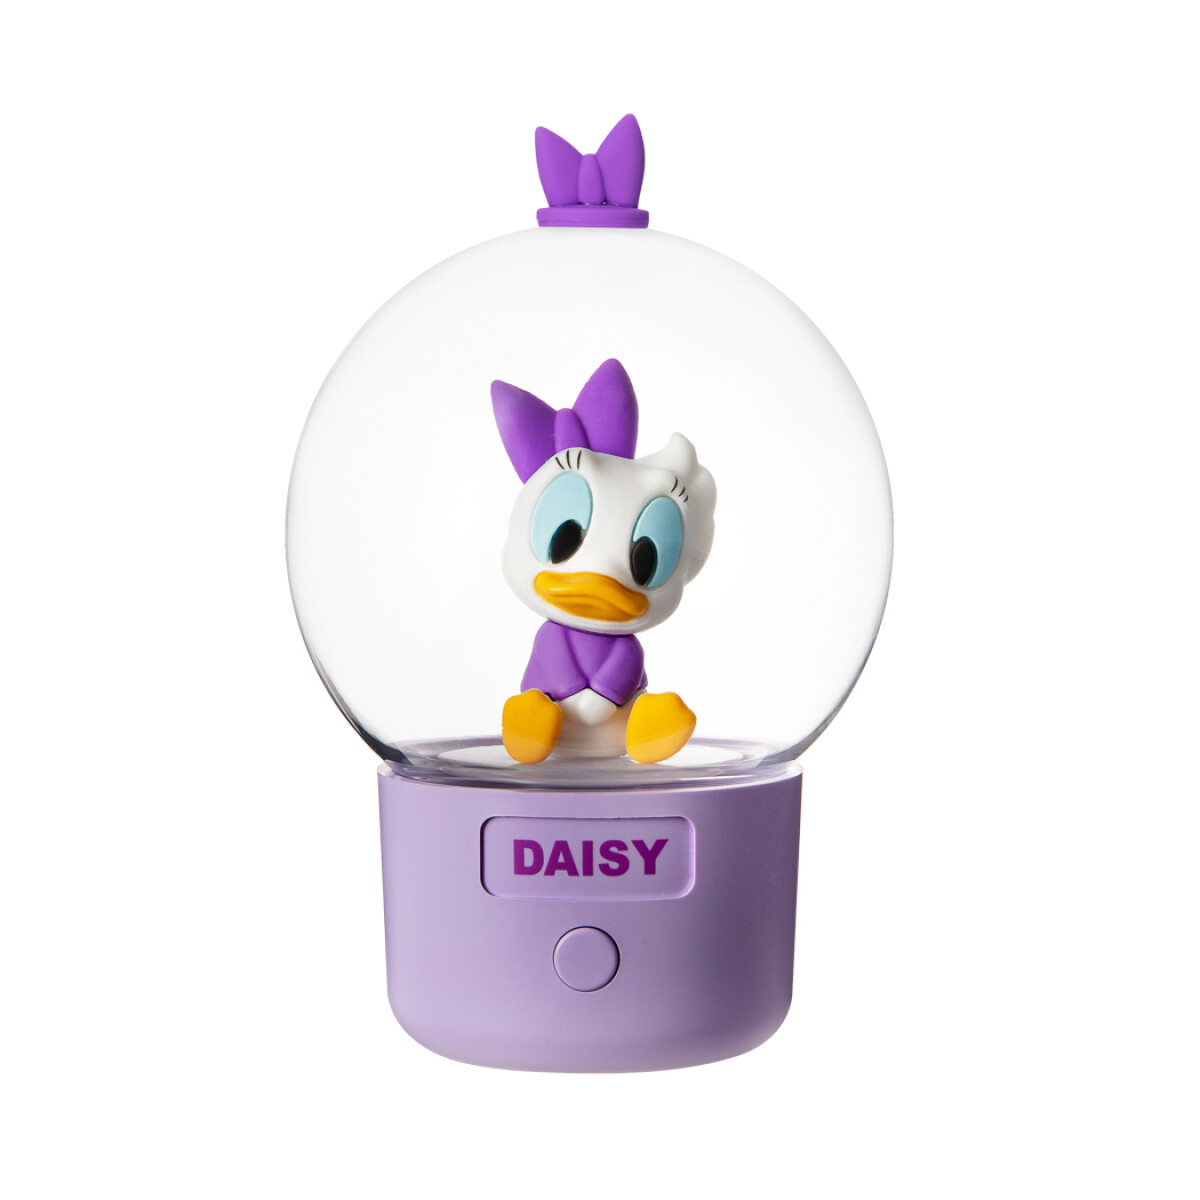 Veladora esfera Disney - Daisy 